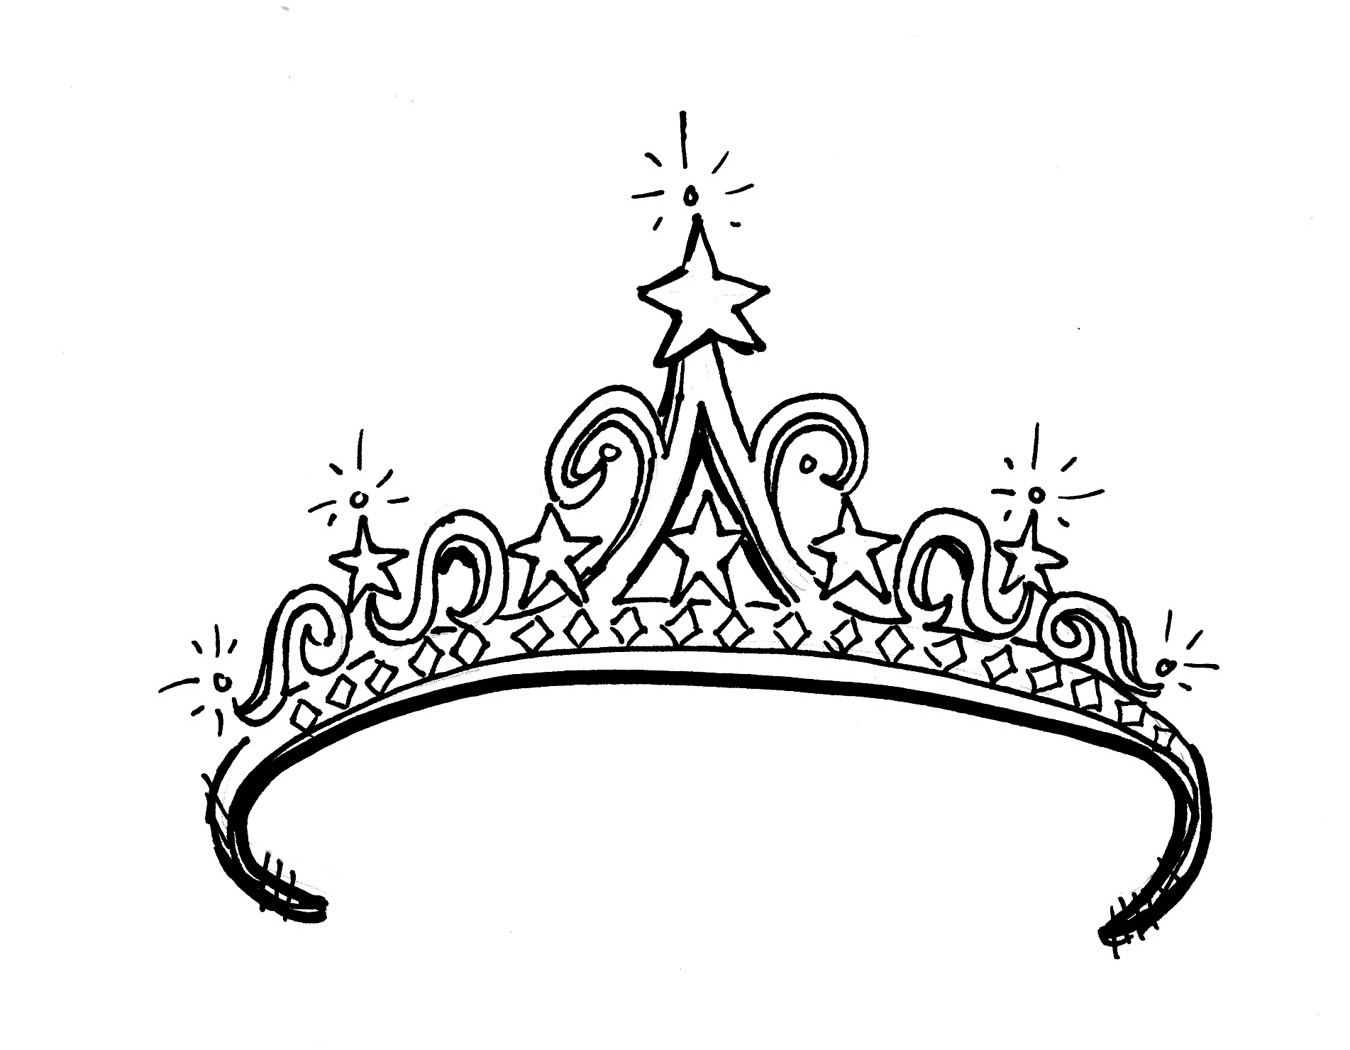 Princess Crown Clipart Free I